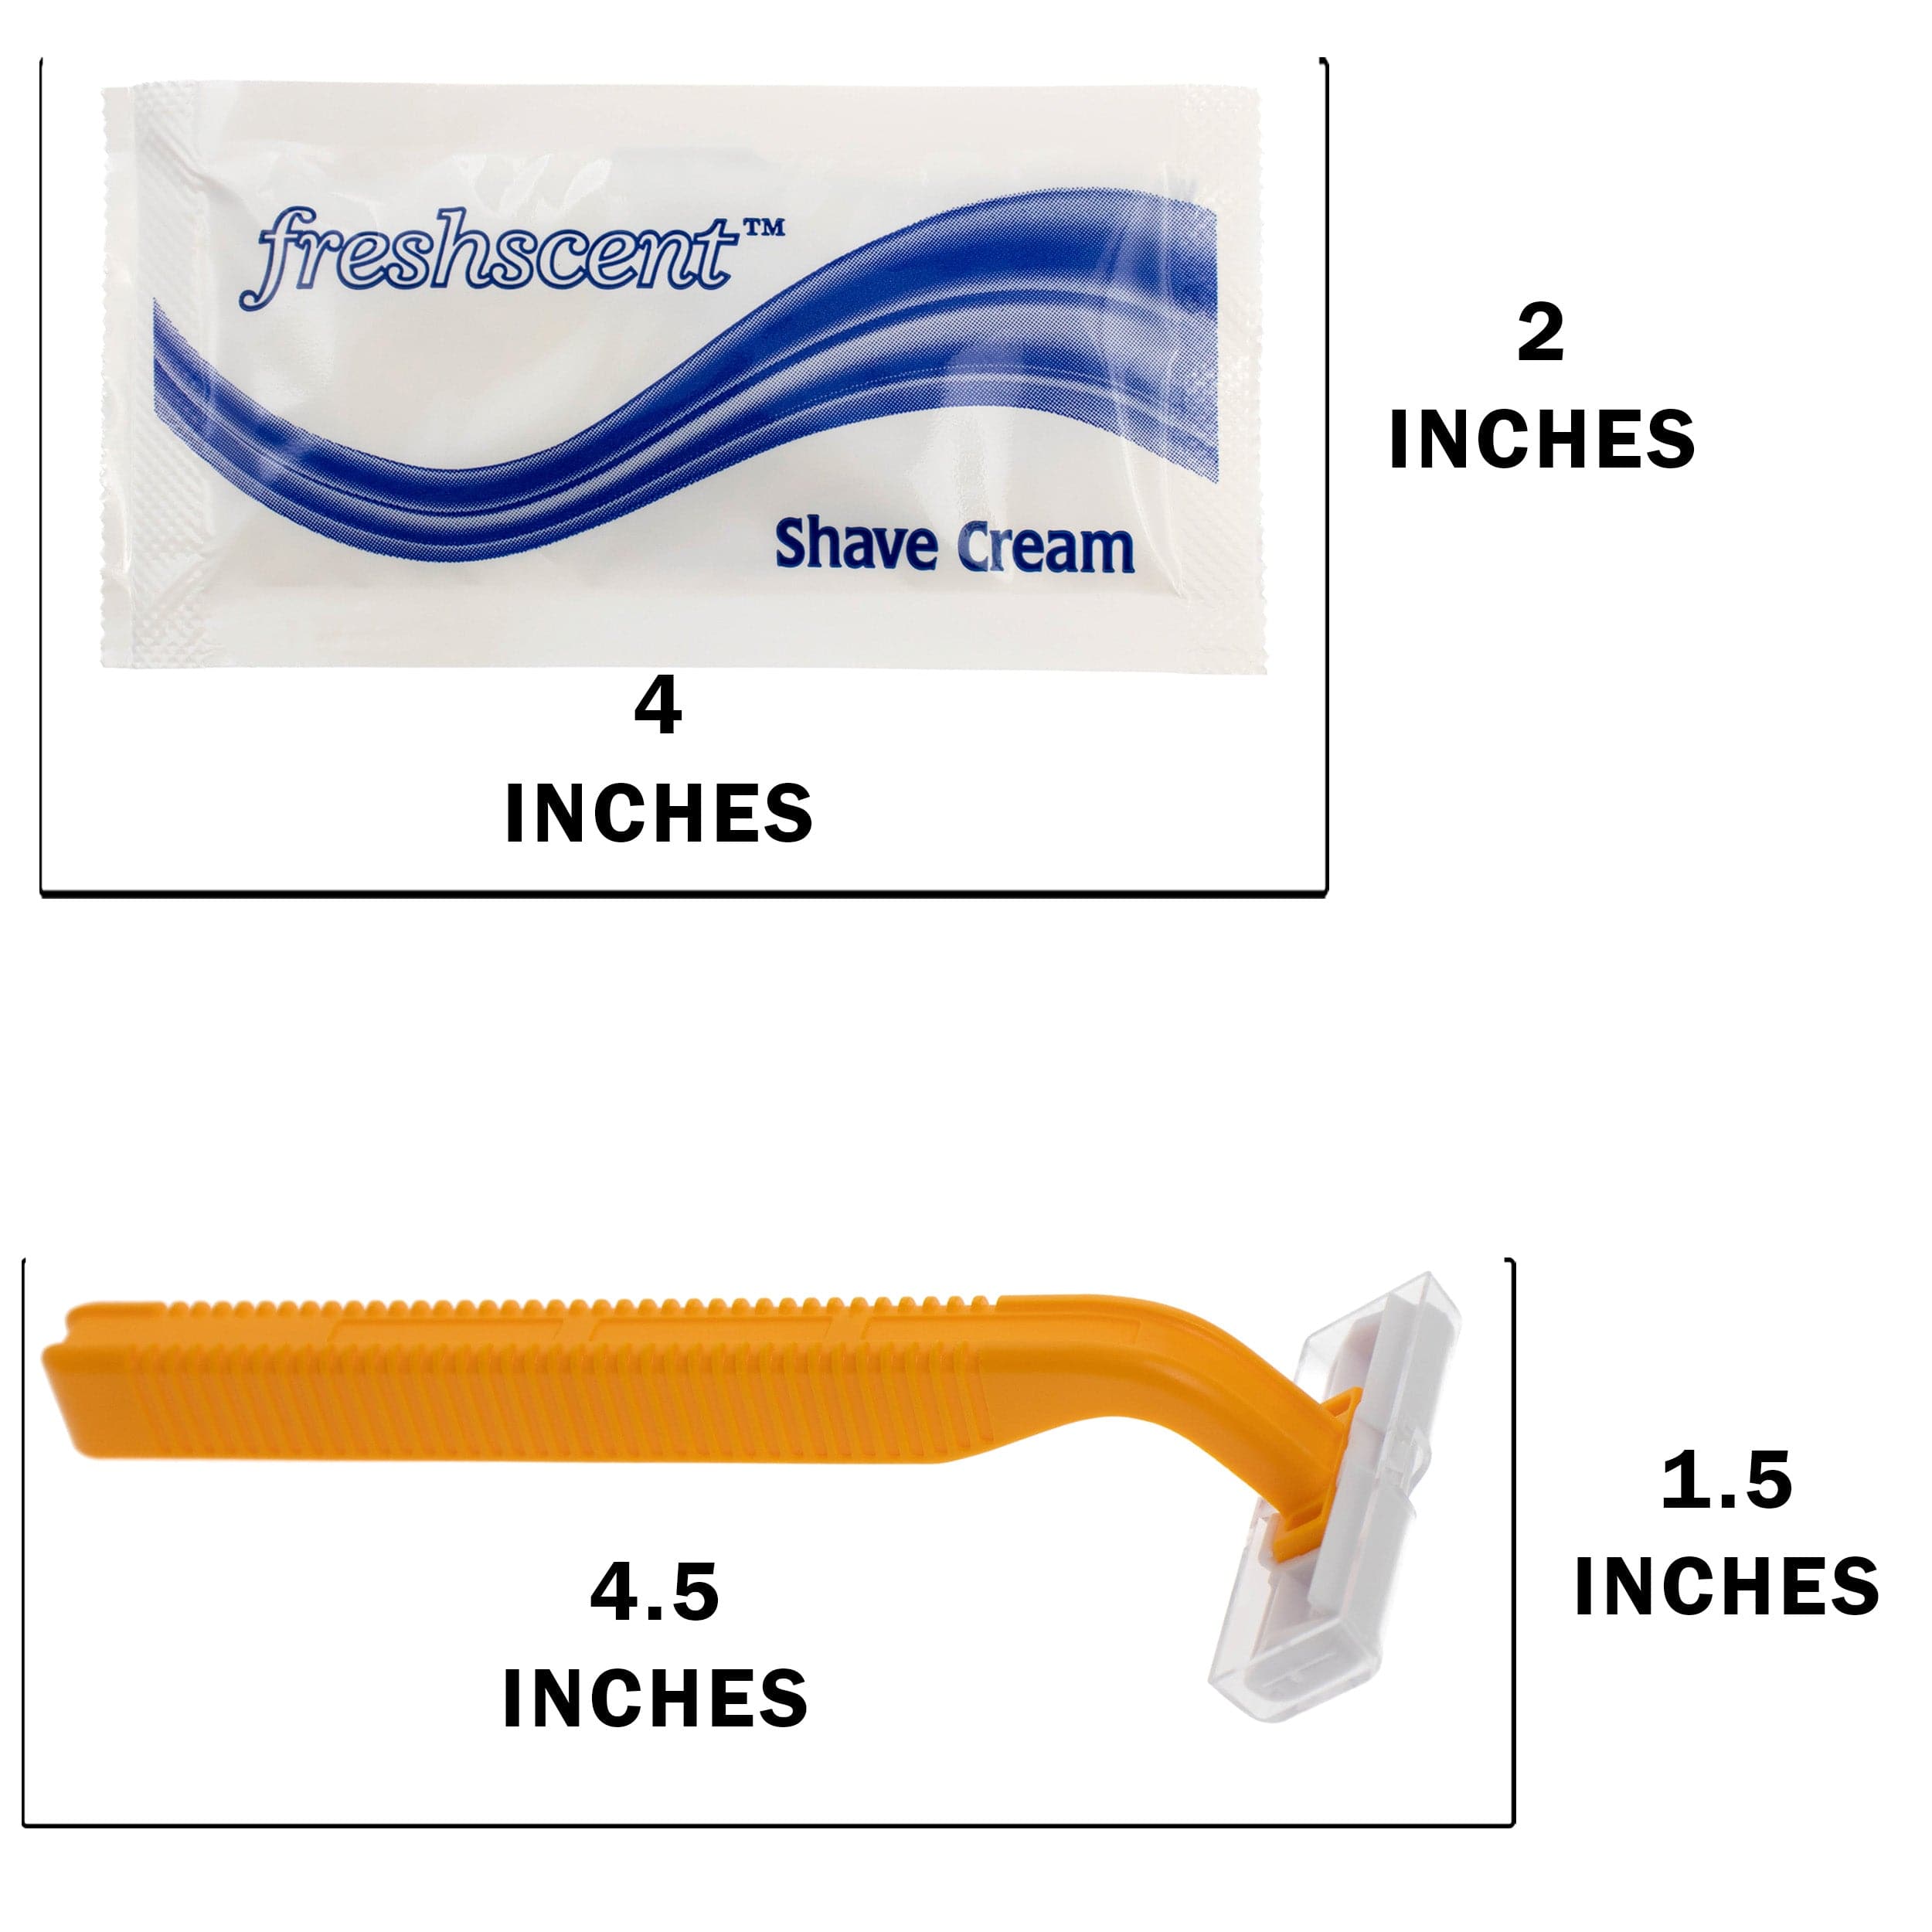 10 Piece Deluxe Wholesale Hygiene Kits - Bulk Toiletry Case of 48